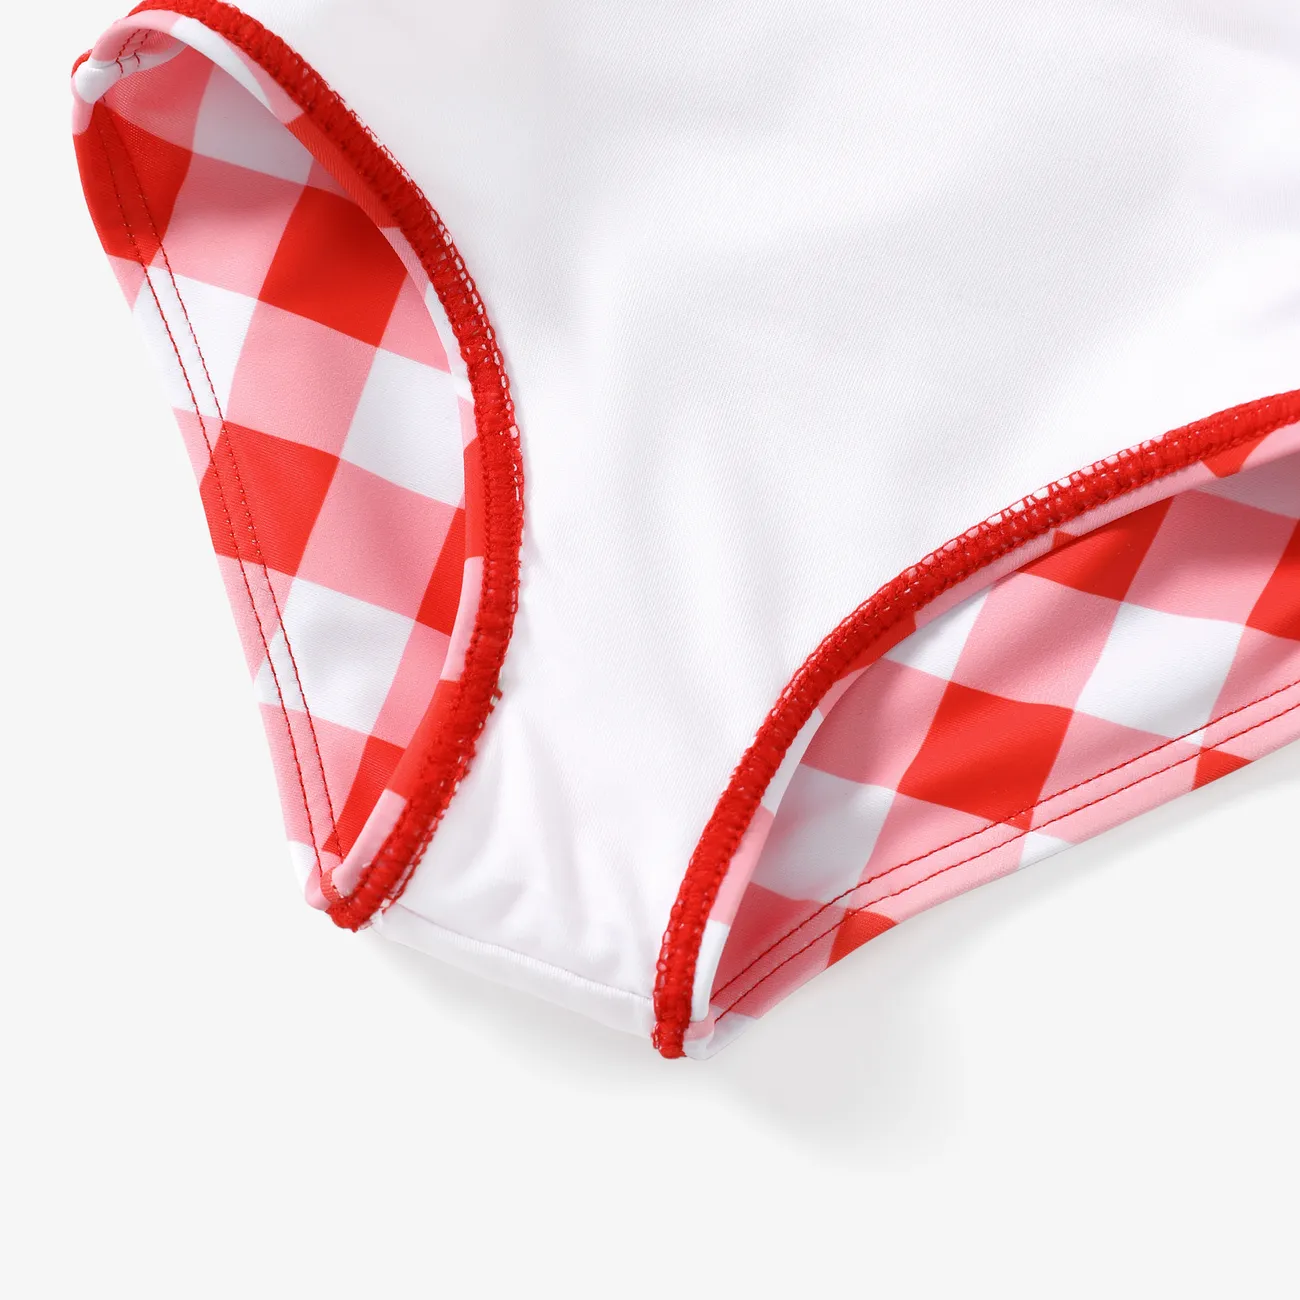 Toddler Girl 3pcs Ruffled Top and Shorts and Headband Swimsuits Set Red big image 1